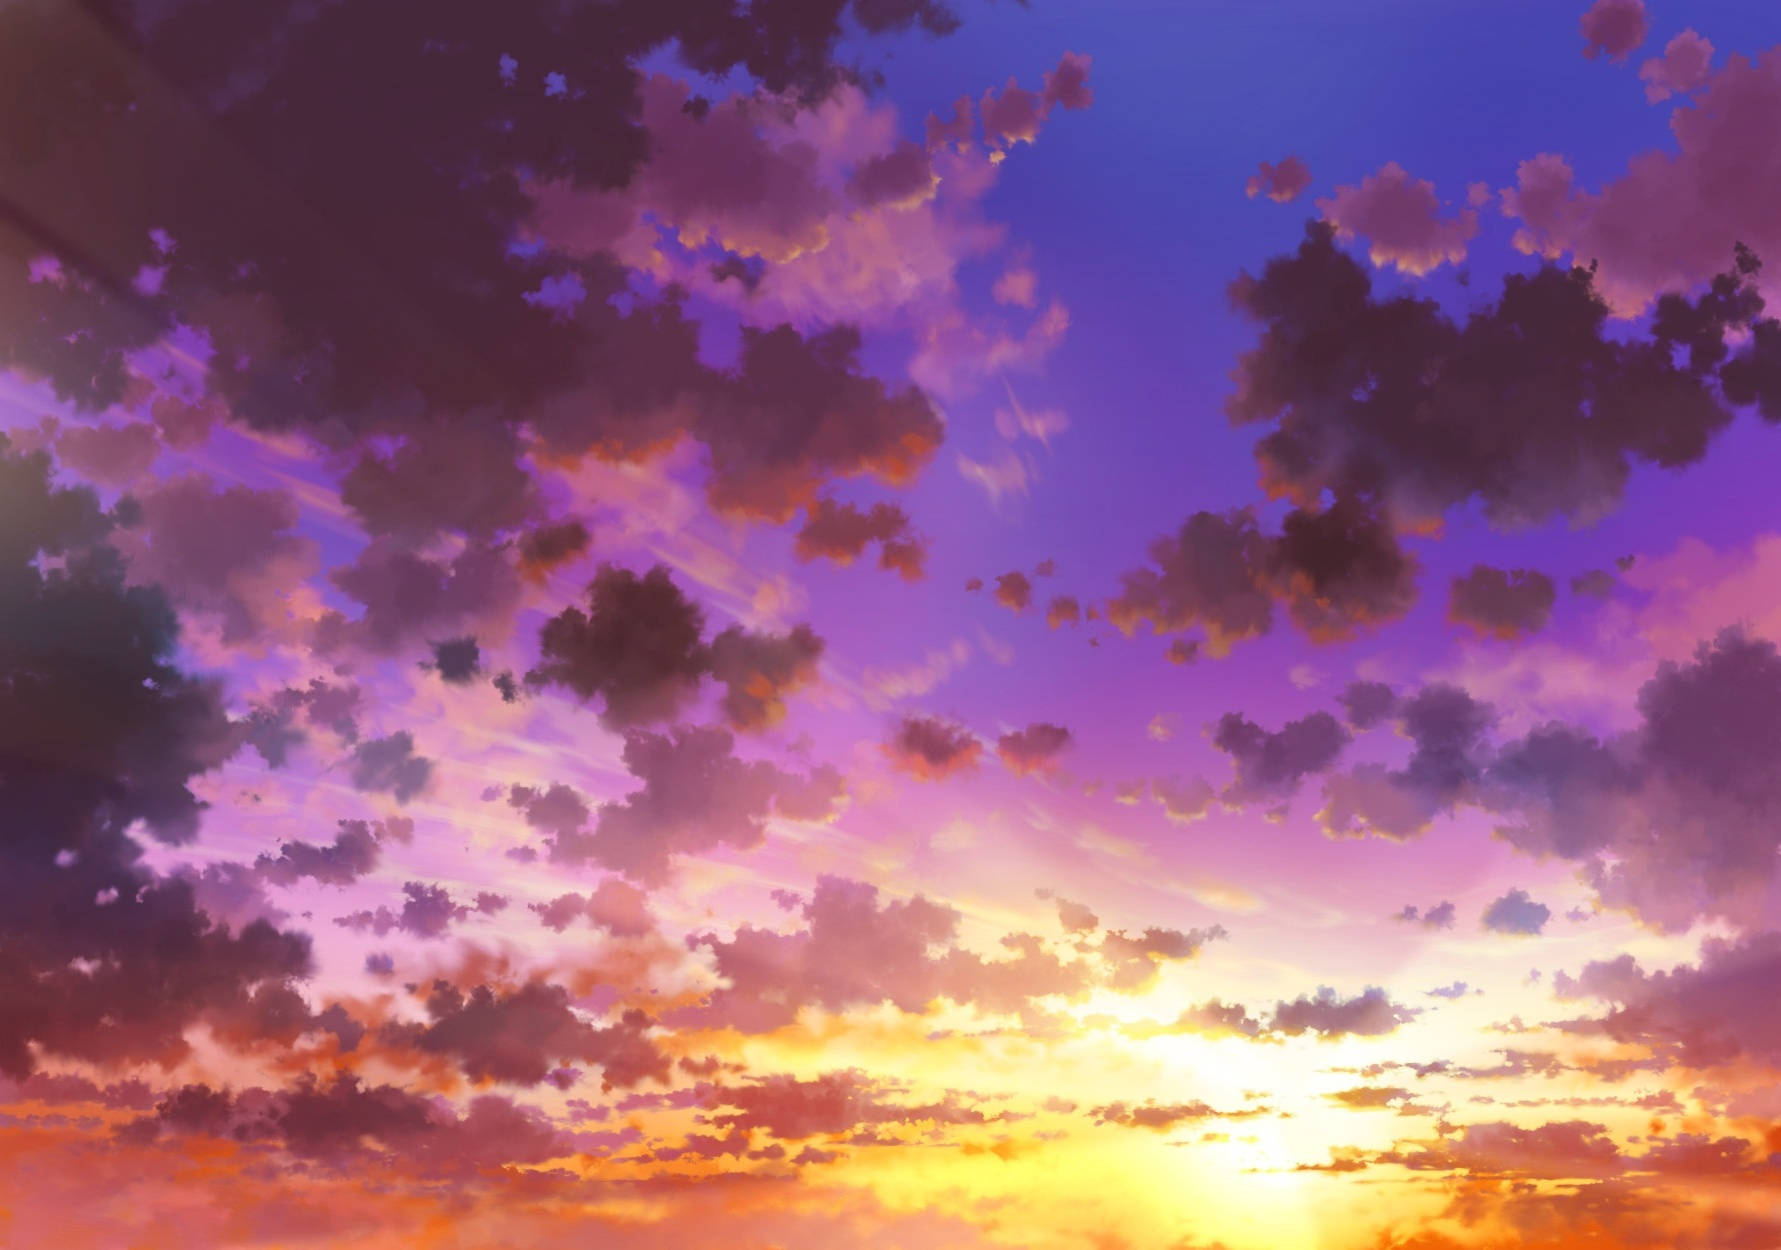 Sunset Sky Digital Art Background